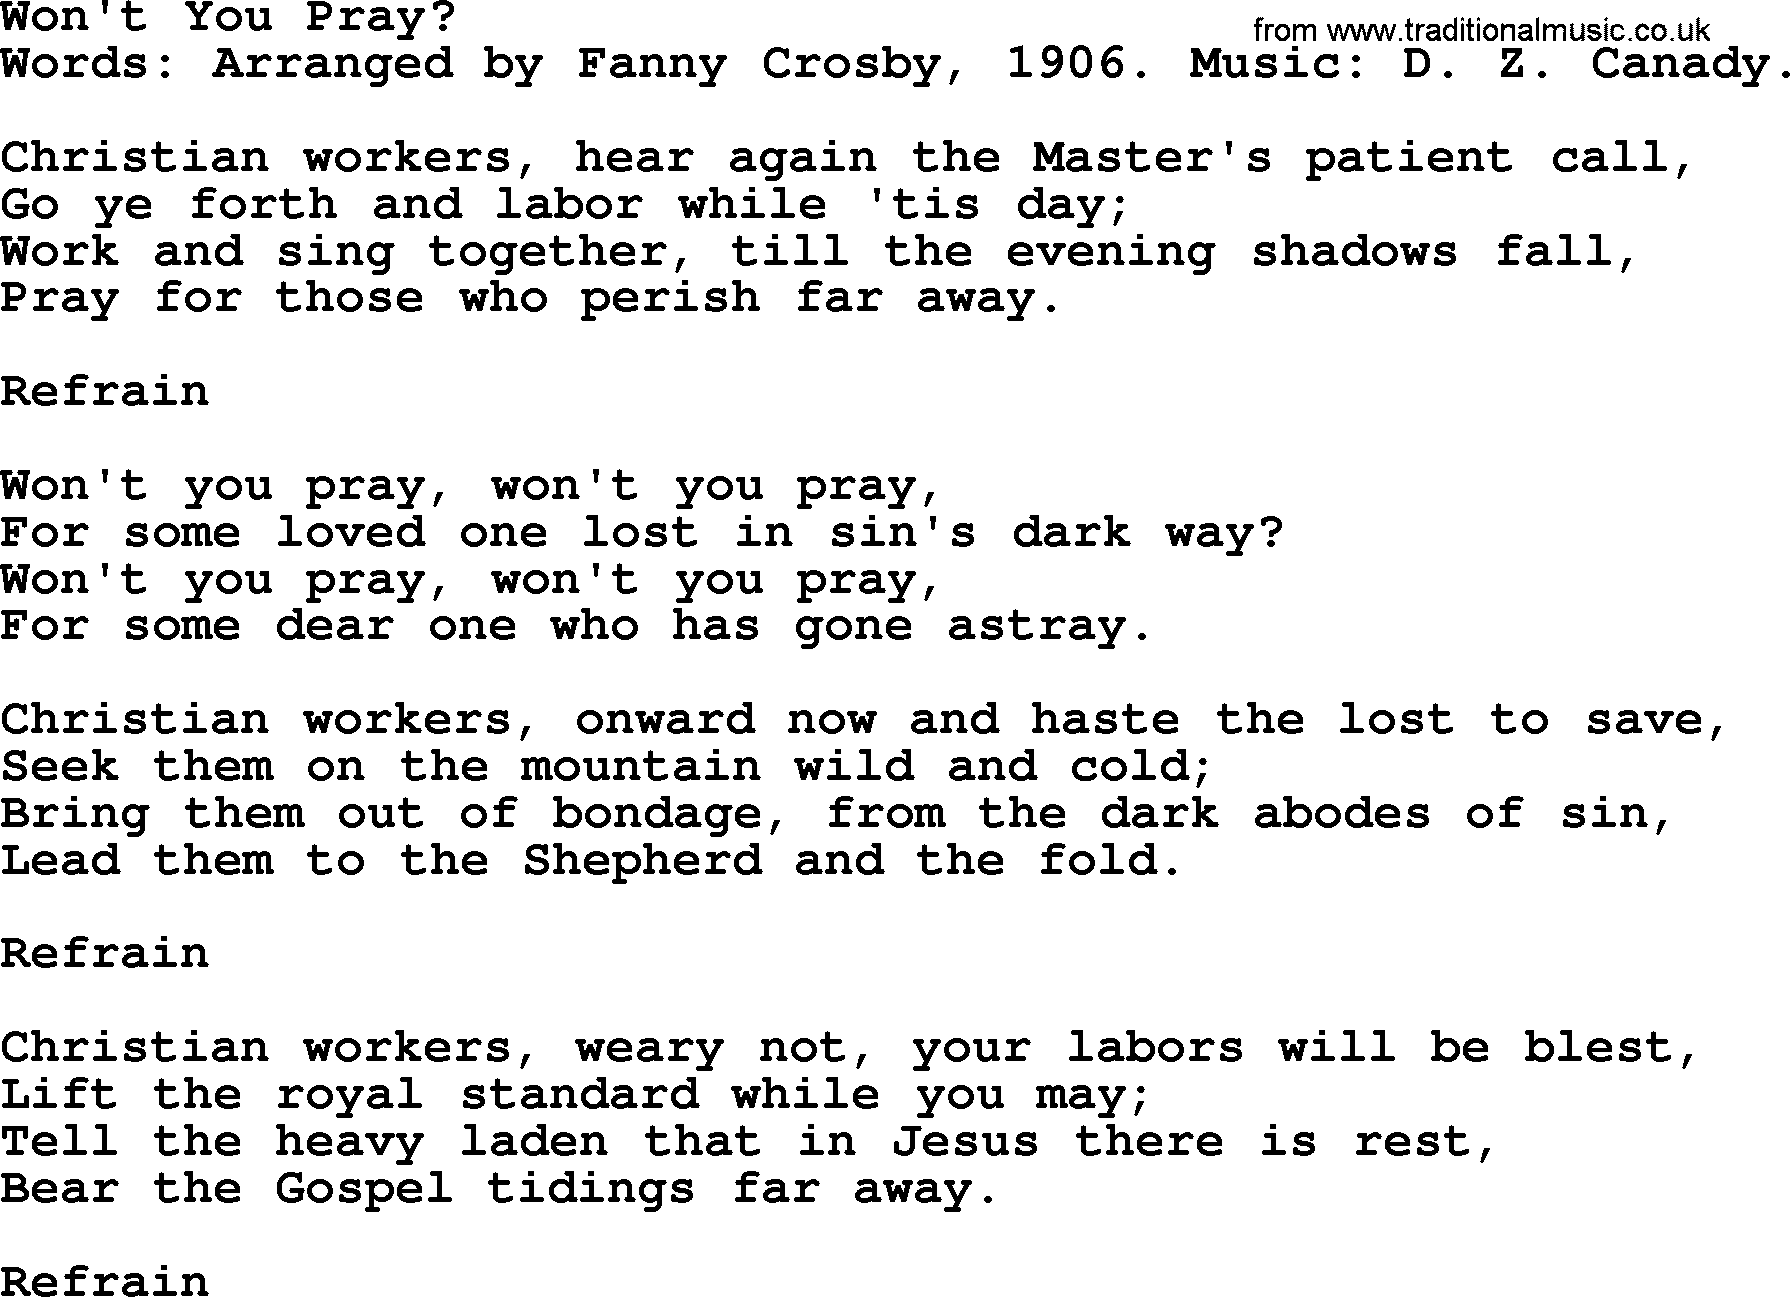 Fanny Crosby song: Won't You Pray, lyrics